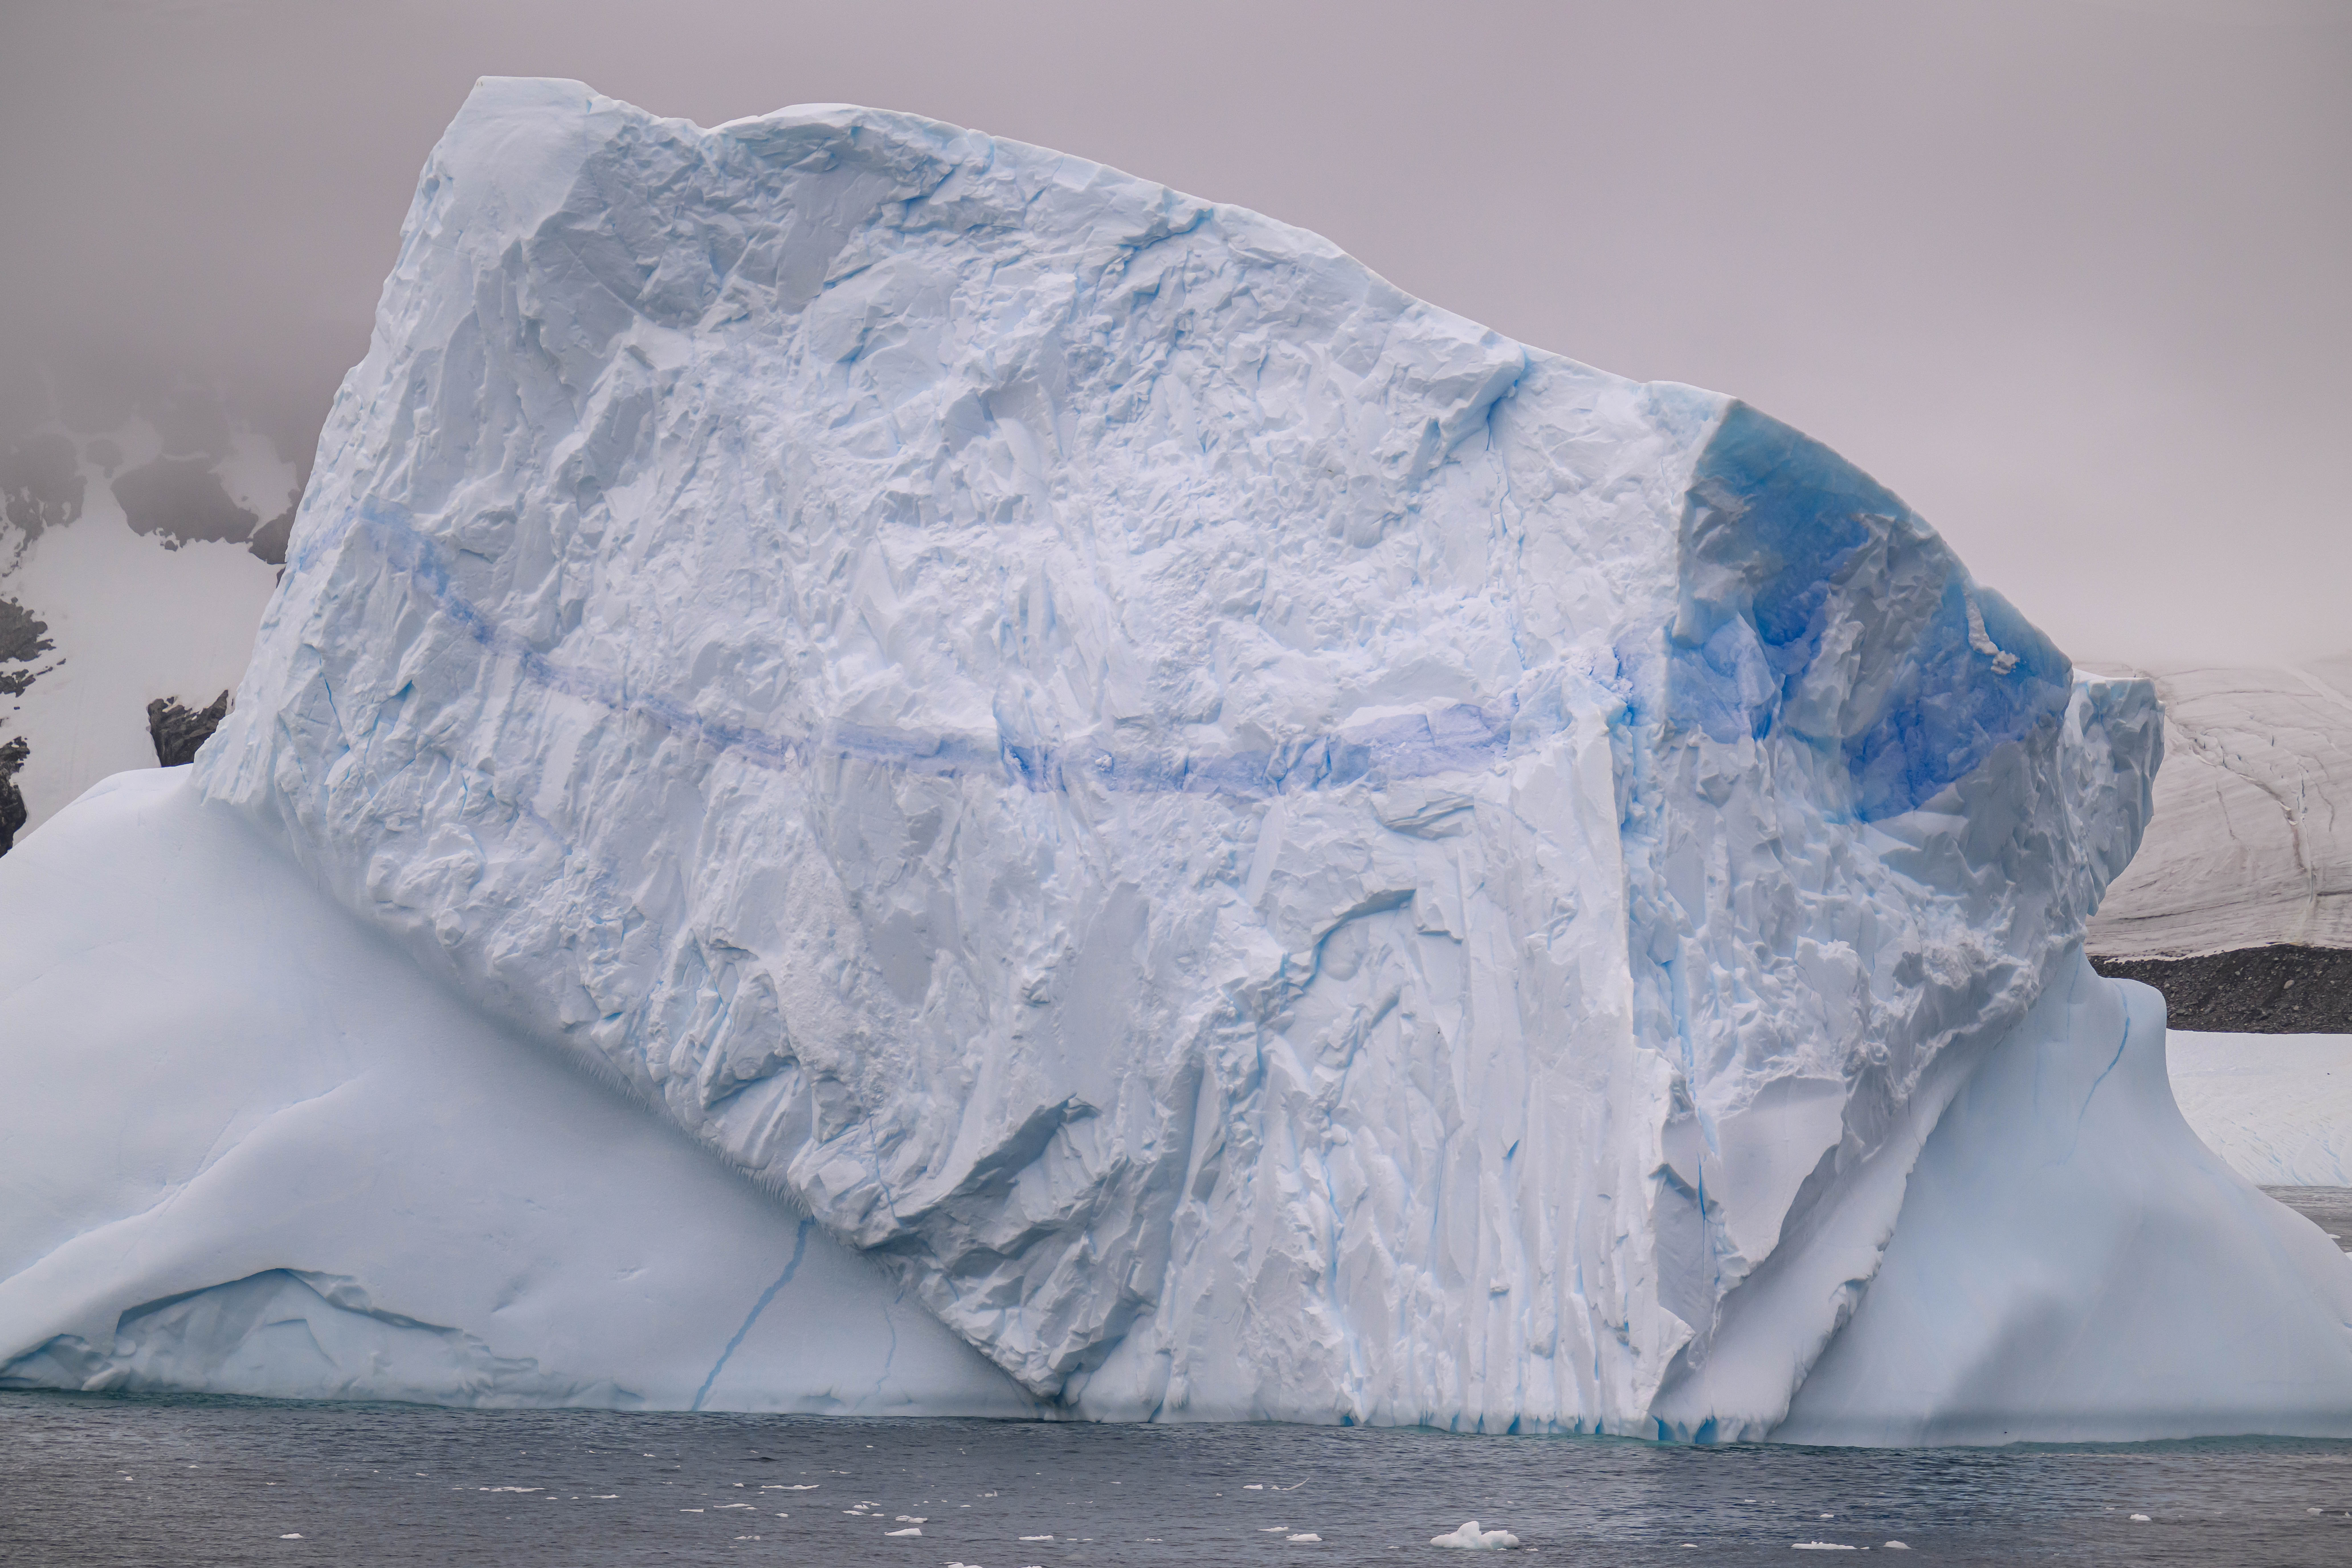 Iceberg Encounter during Night